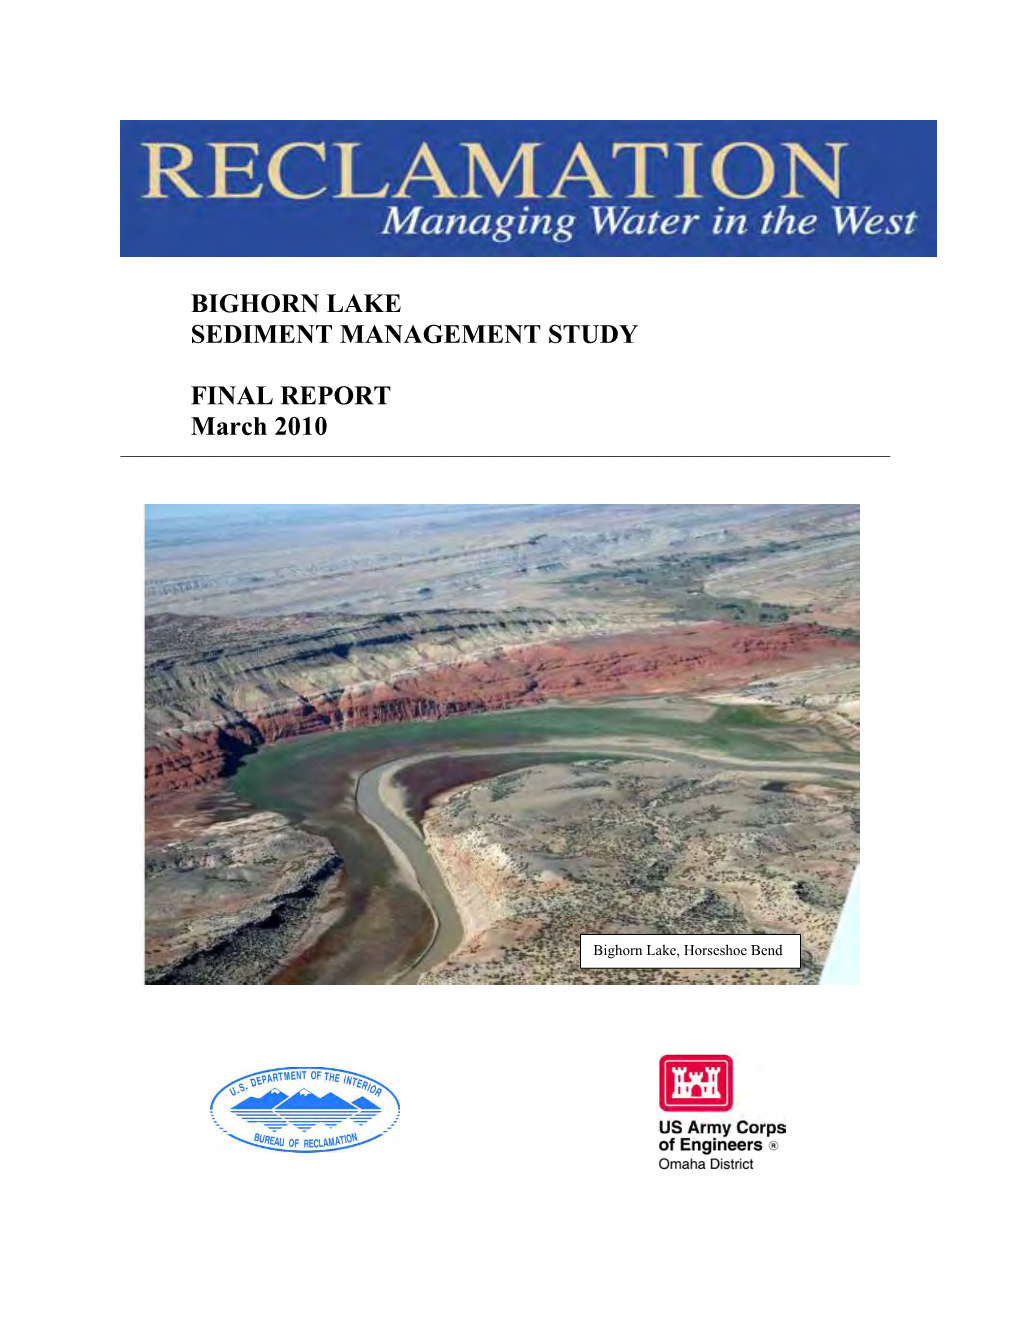 Bighorn Lake Sediment Management Study, Final Report